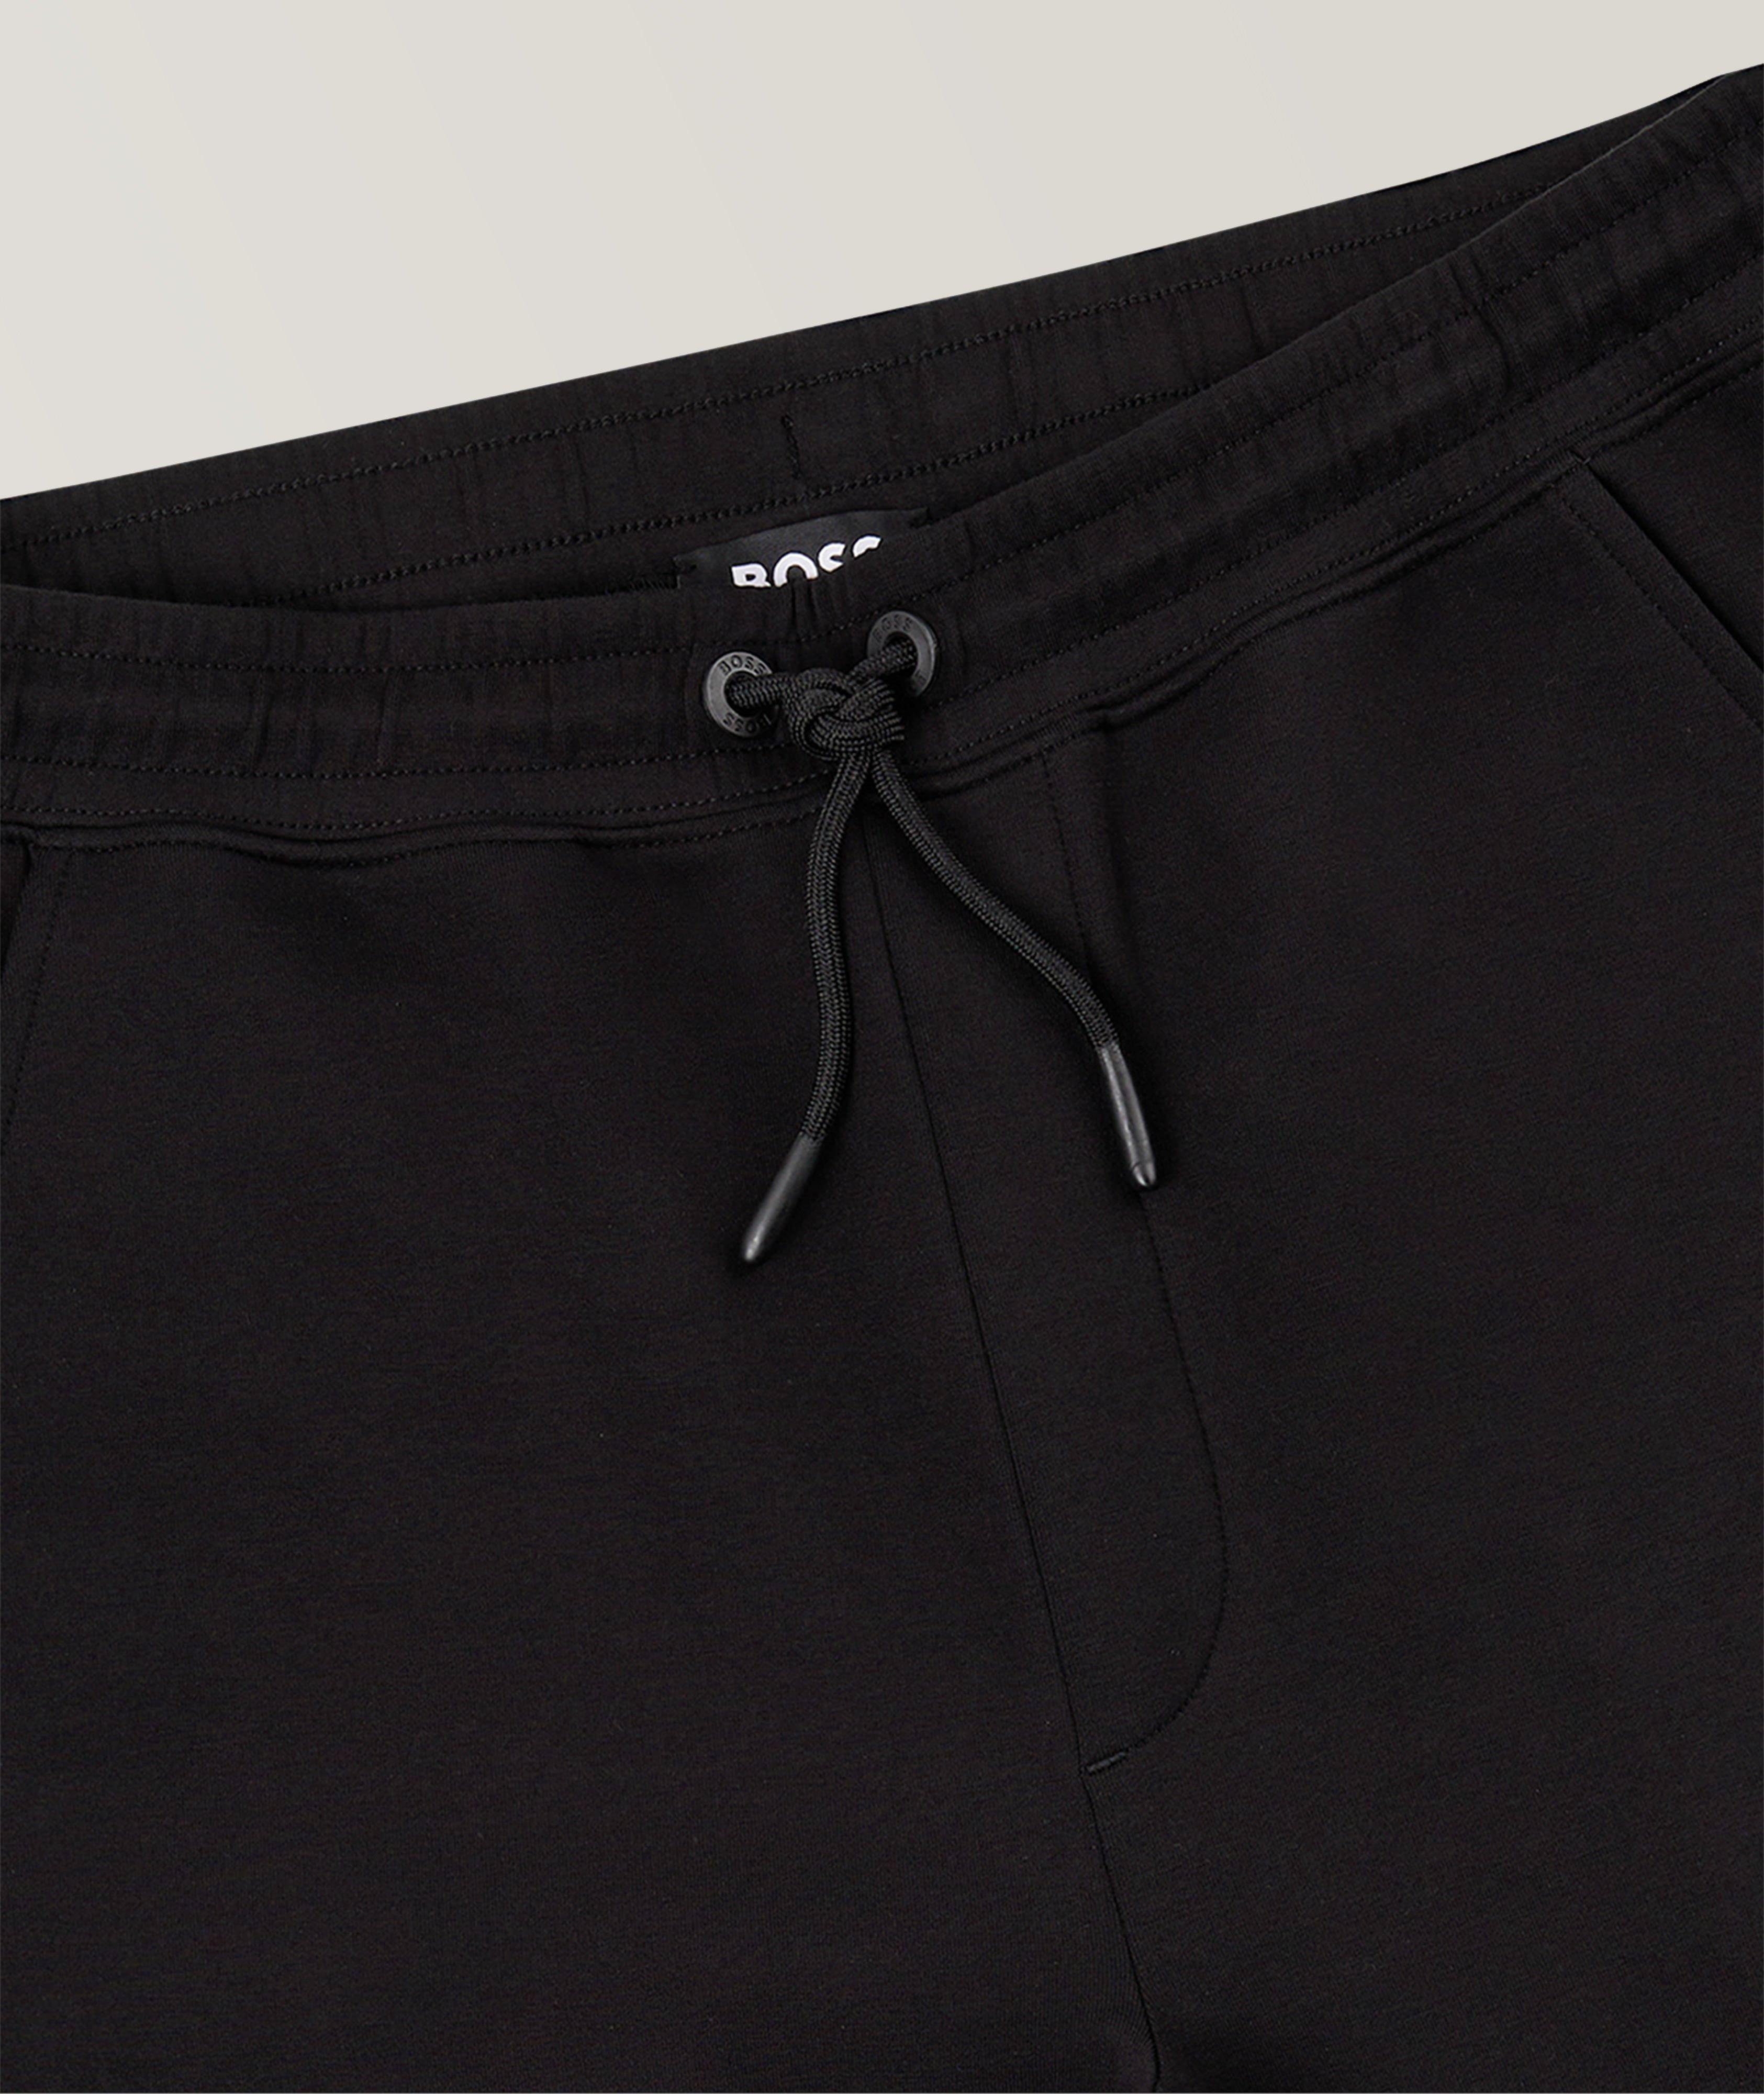 BOSS X NBA Cotton-Blend Shorts image 1